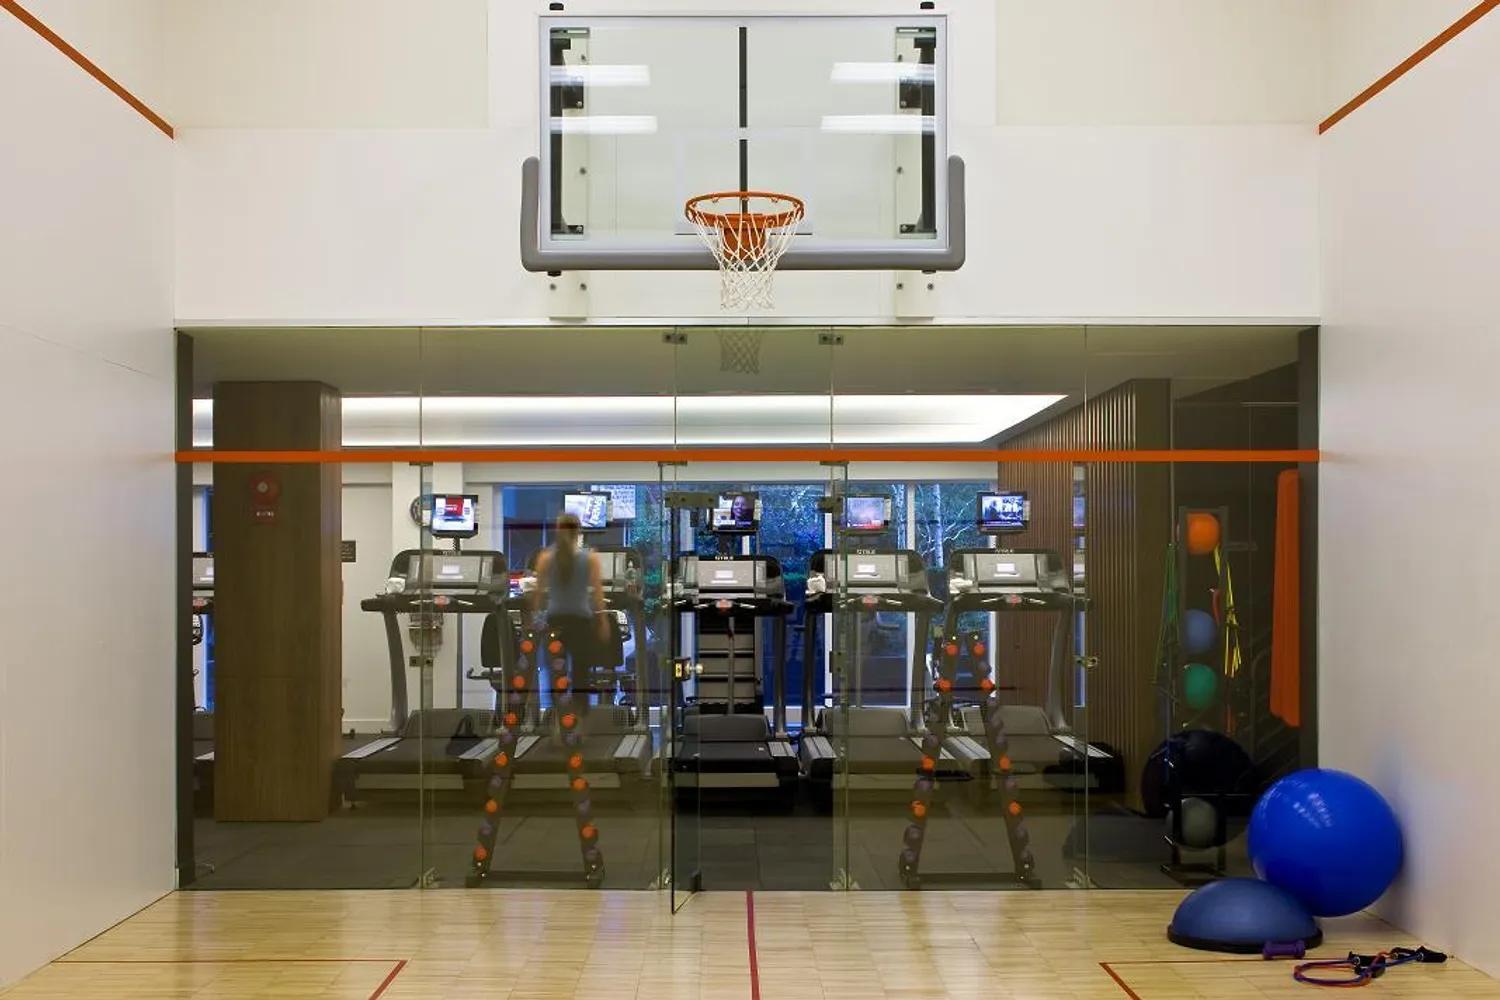 Basketball Court